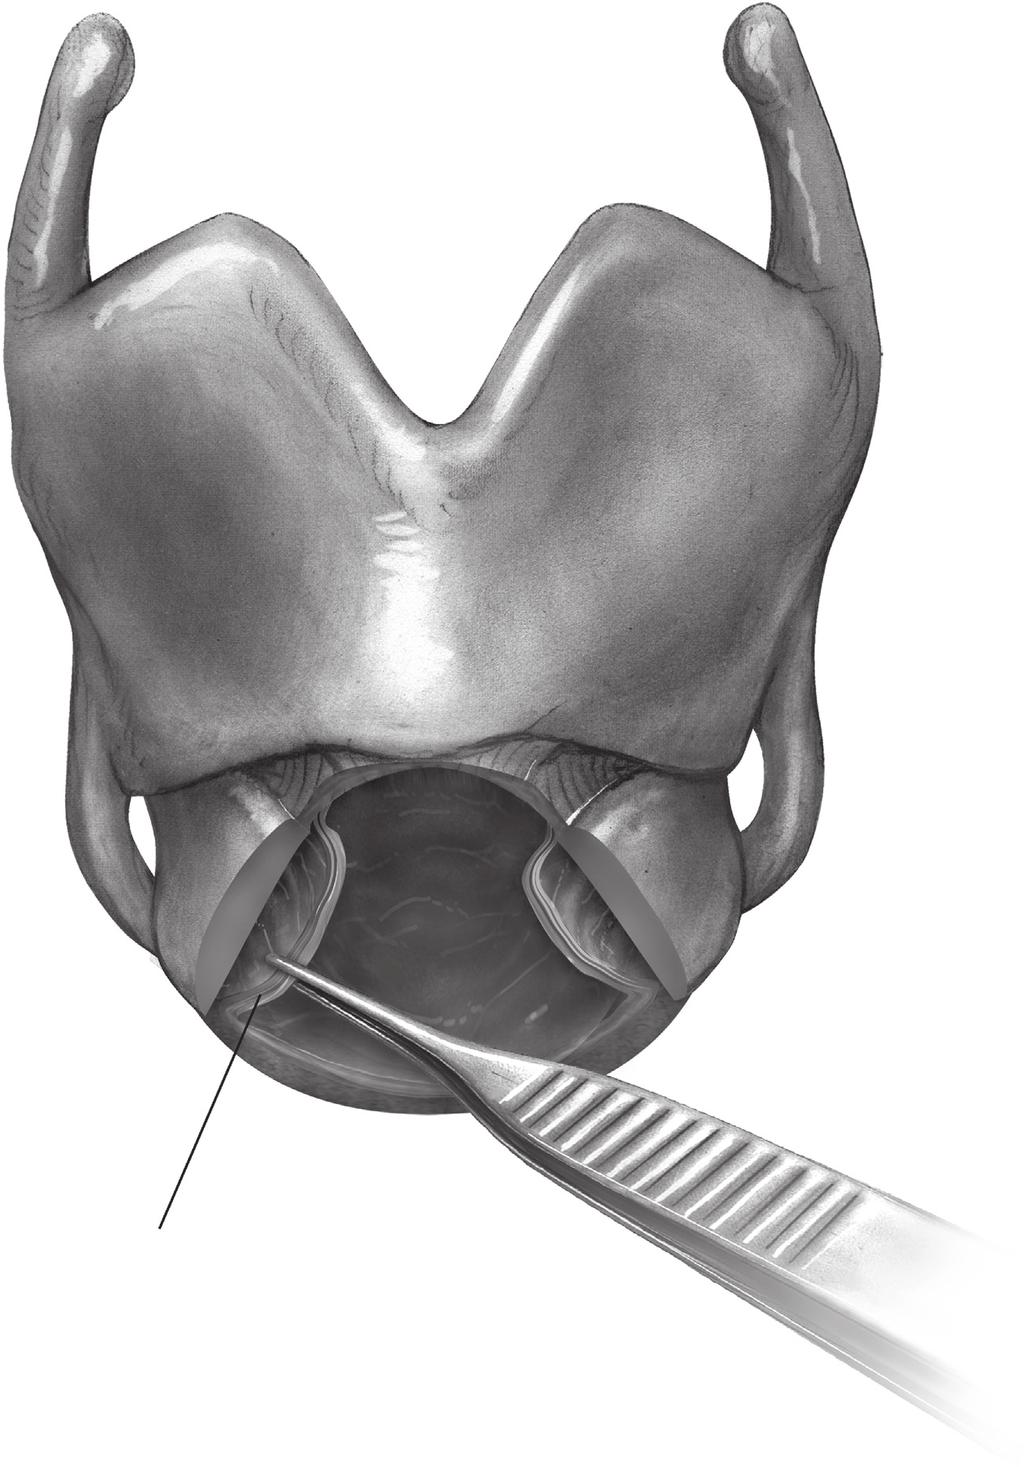 60 J.D. Mitchell Mucosa Figure 12 Tailoring cricoplasty.